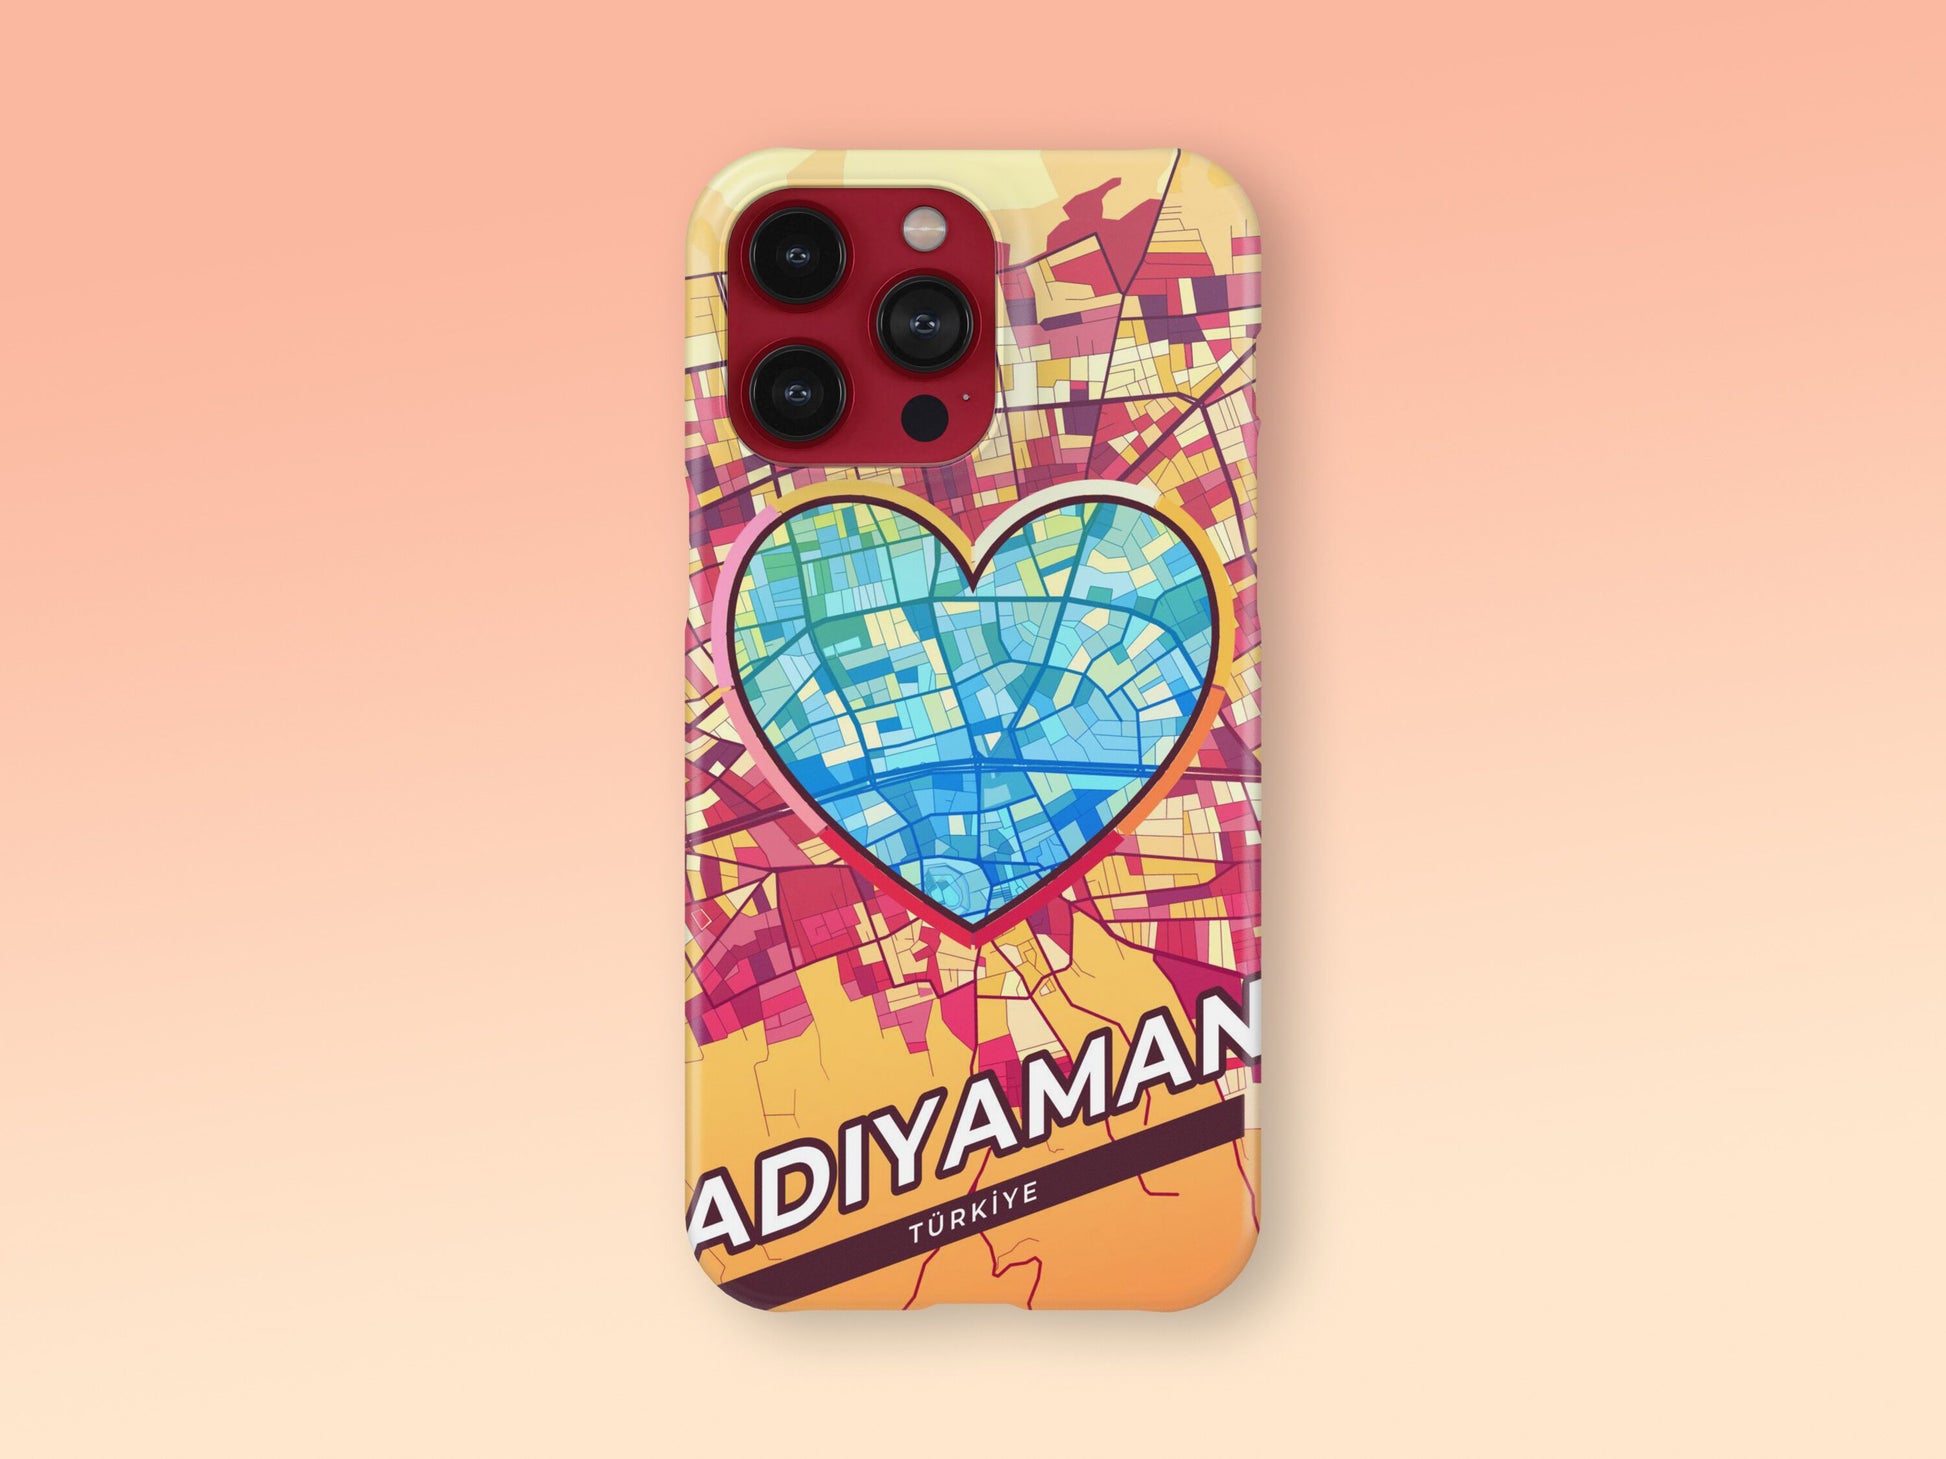 Adıyaman Turkey slim phone case with colorful icon. Birthday, wedding or housewarming gift. Couple match cases. 2